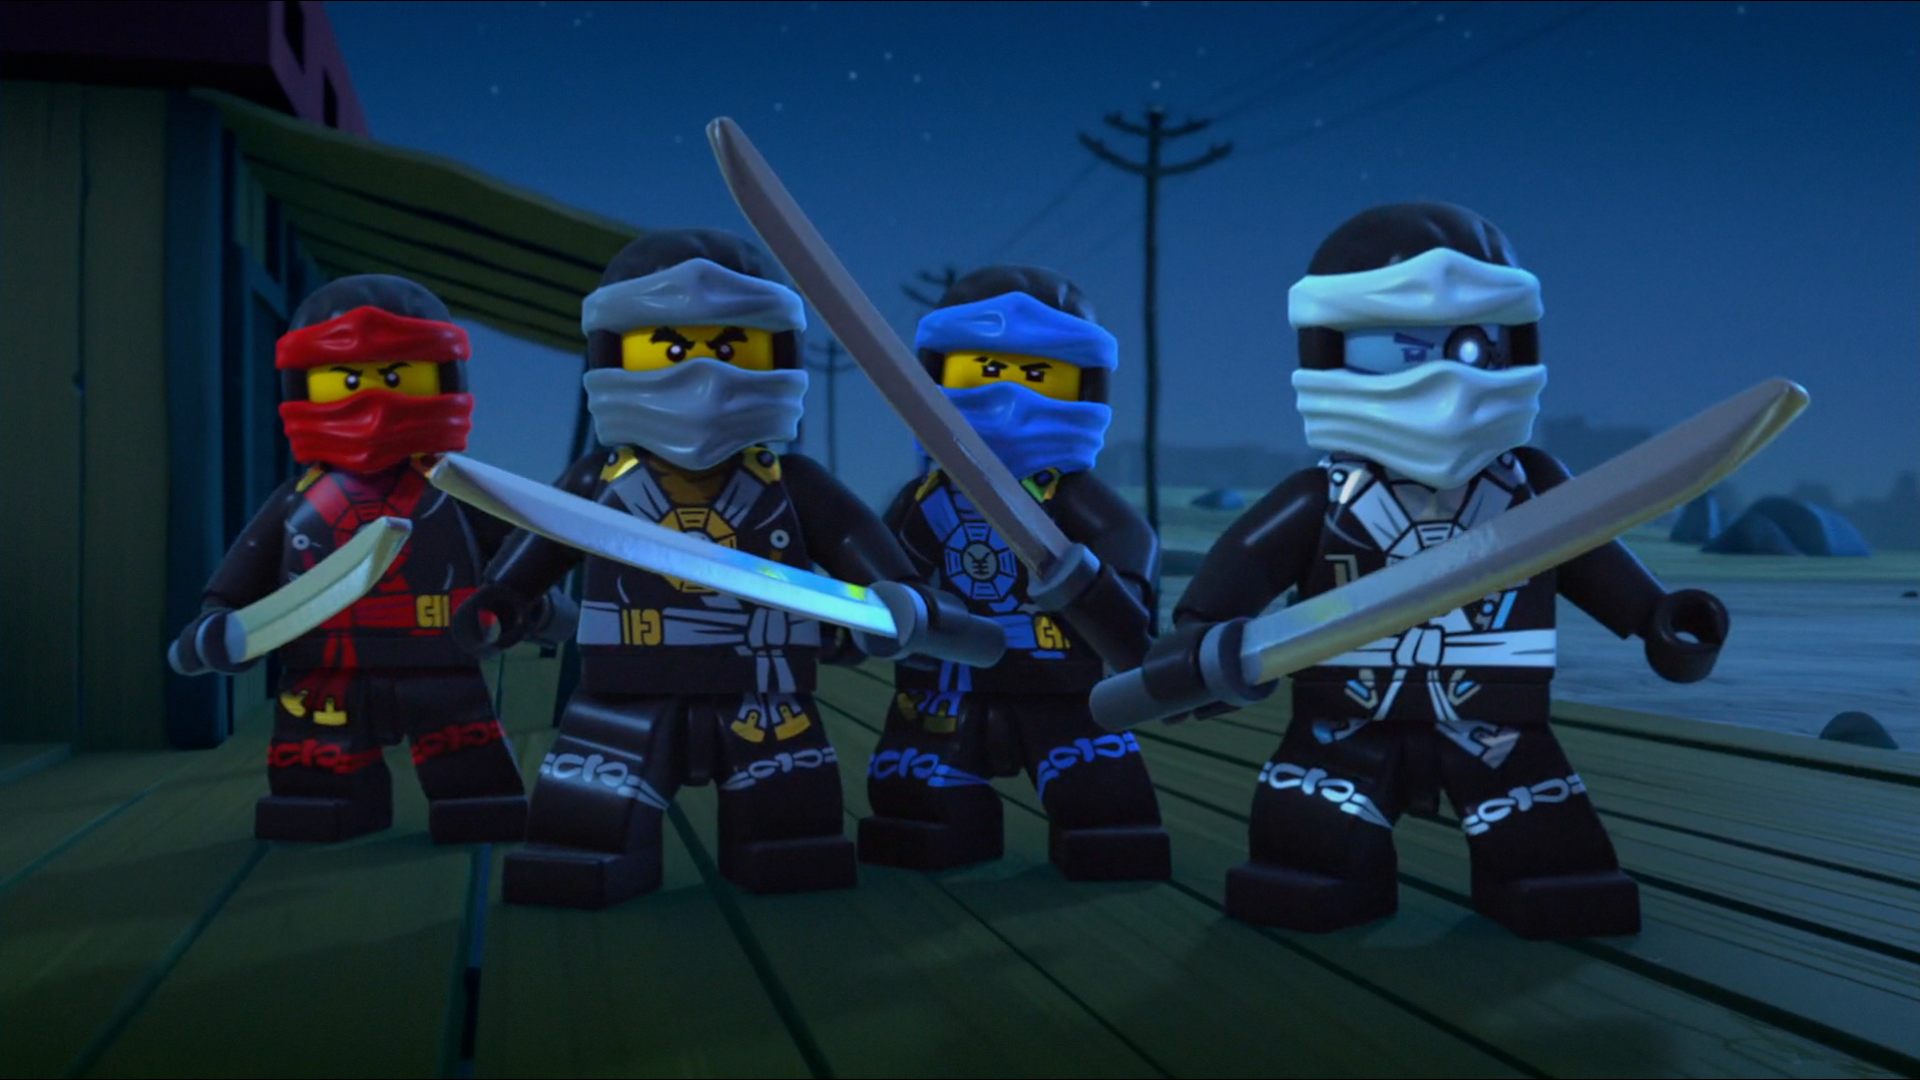 LEGO Minifig, Weapon Sword, Katana (Octagonal Guard), Colo…